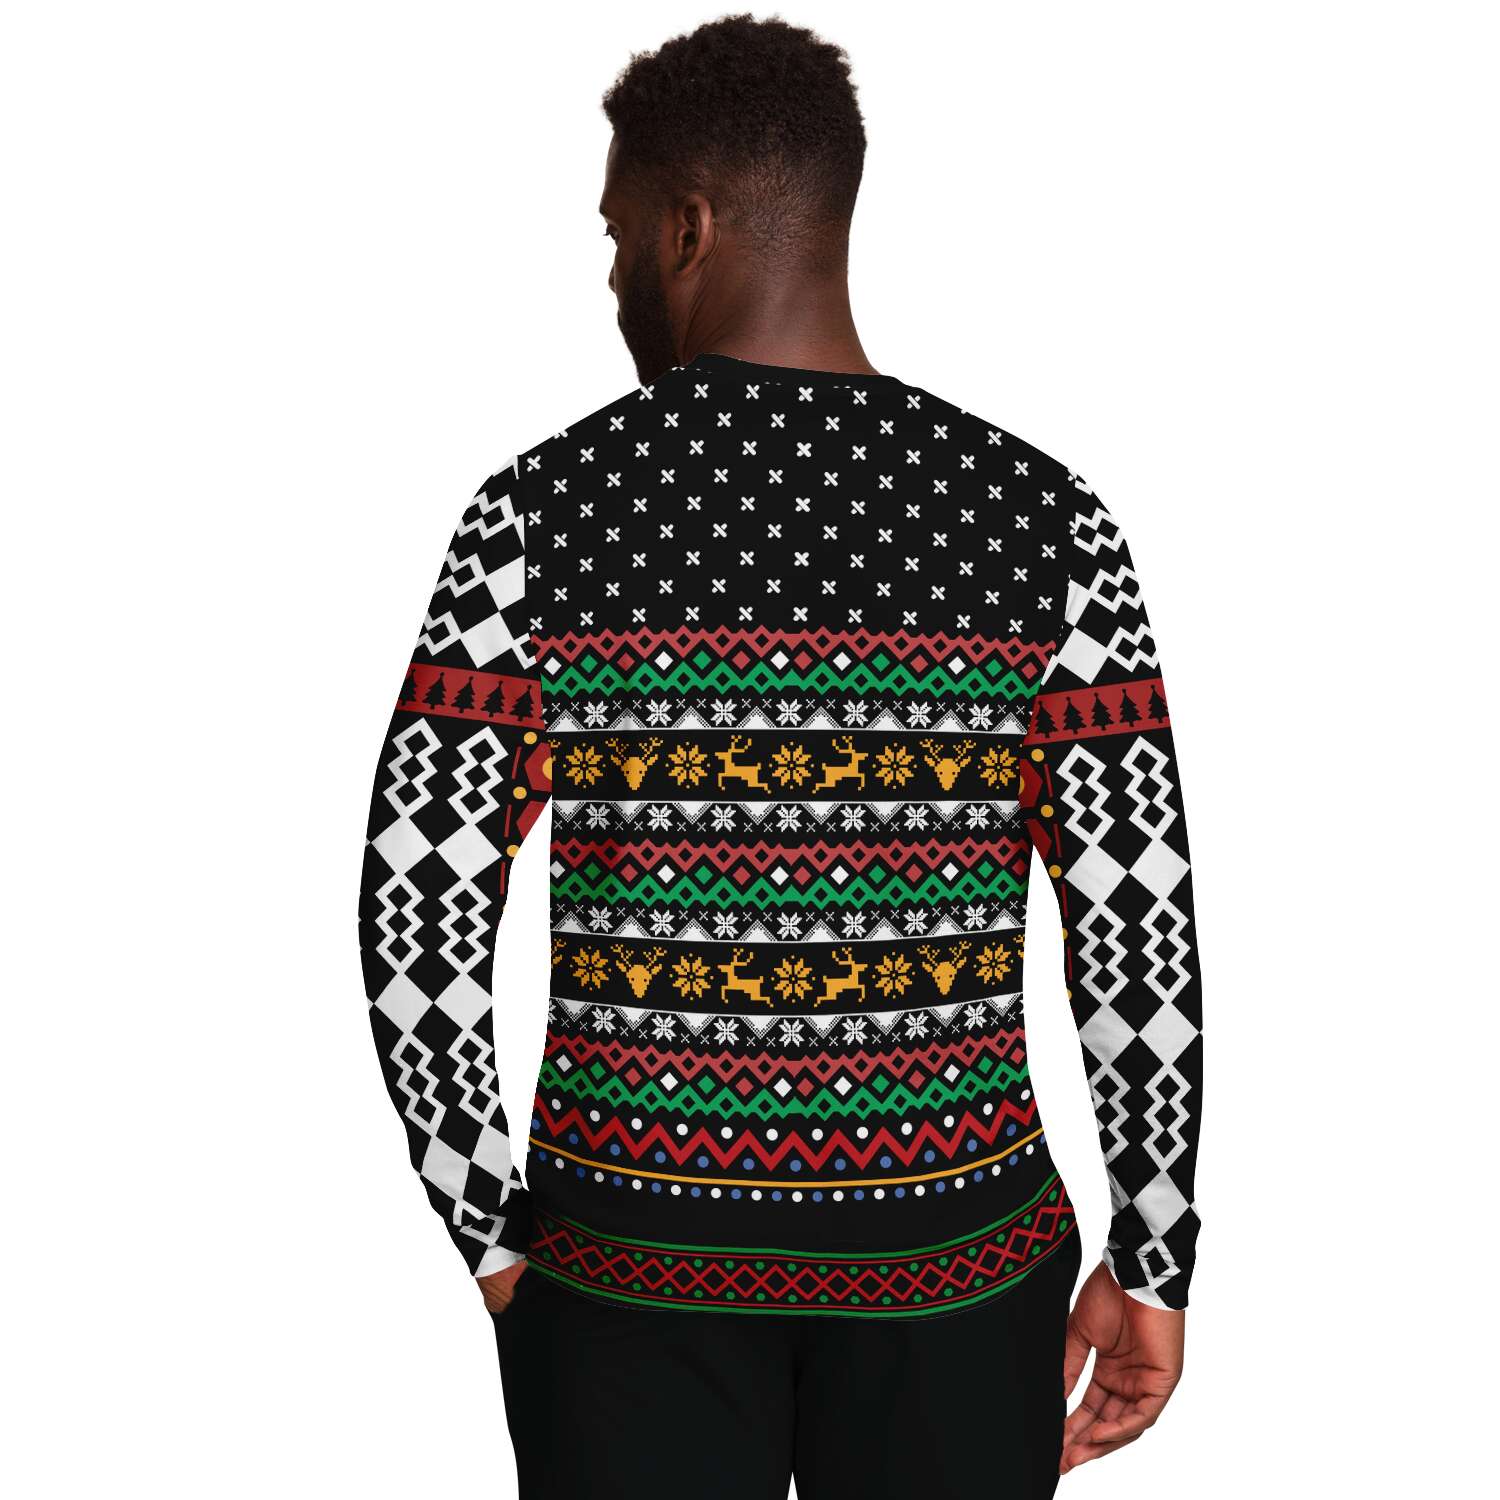 Santa's Bouncer Sweatshirt | Unisex Ugly Christmas Sweater, Xmas Sweater, Holiday Sweater, Festive Sweater, Funny Sweater, Funny Party Shirt